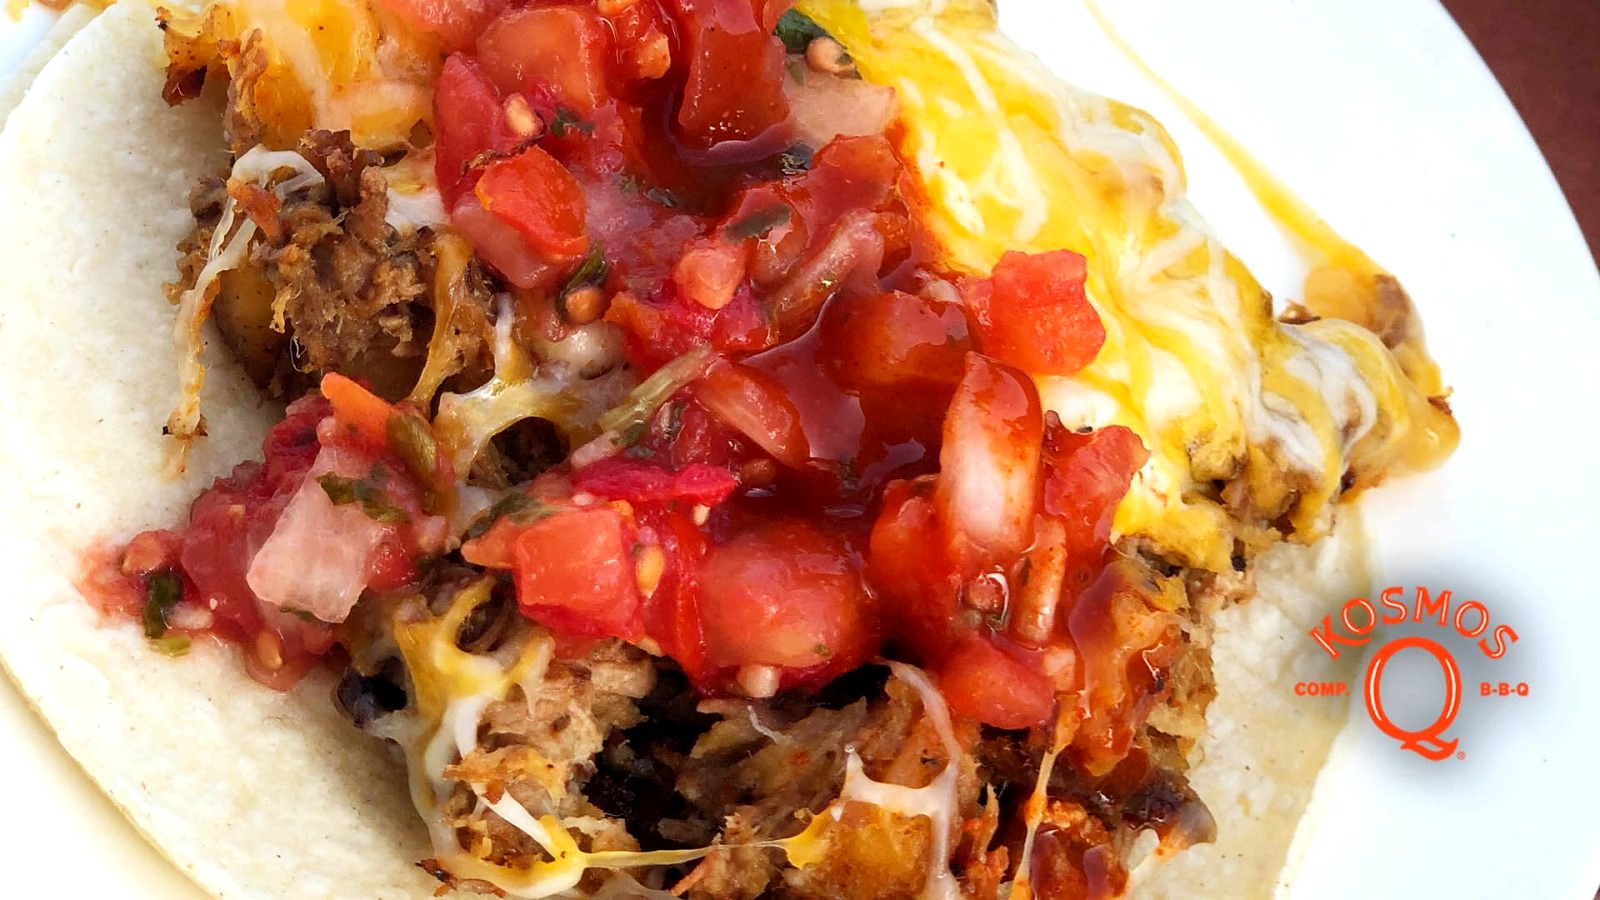 Image of $5 Breakfast | Brisket Tacos Recipe